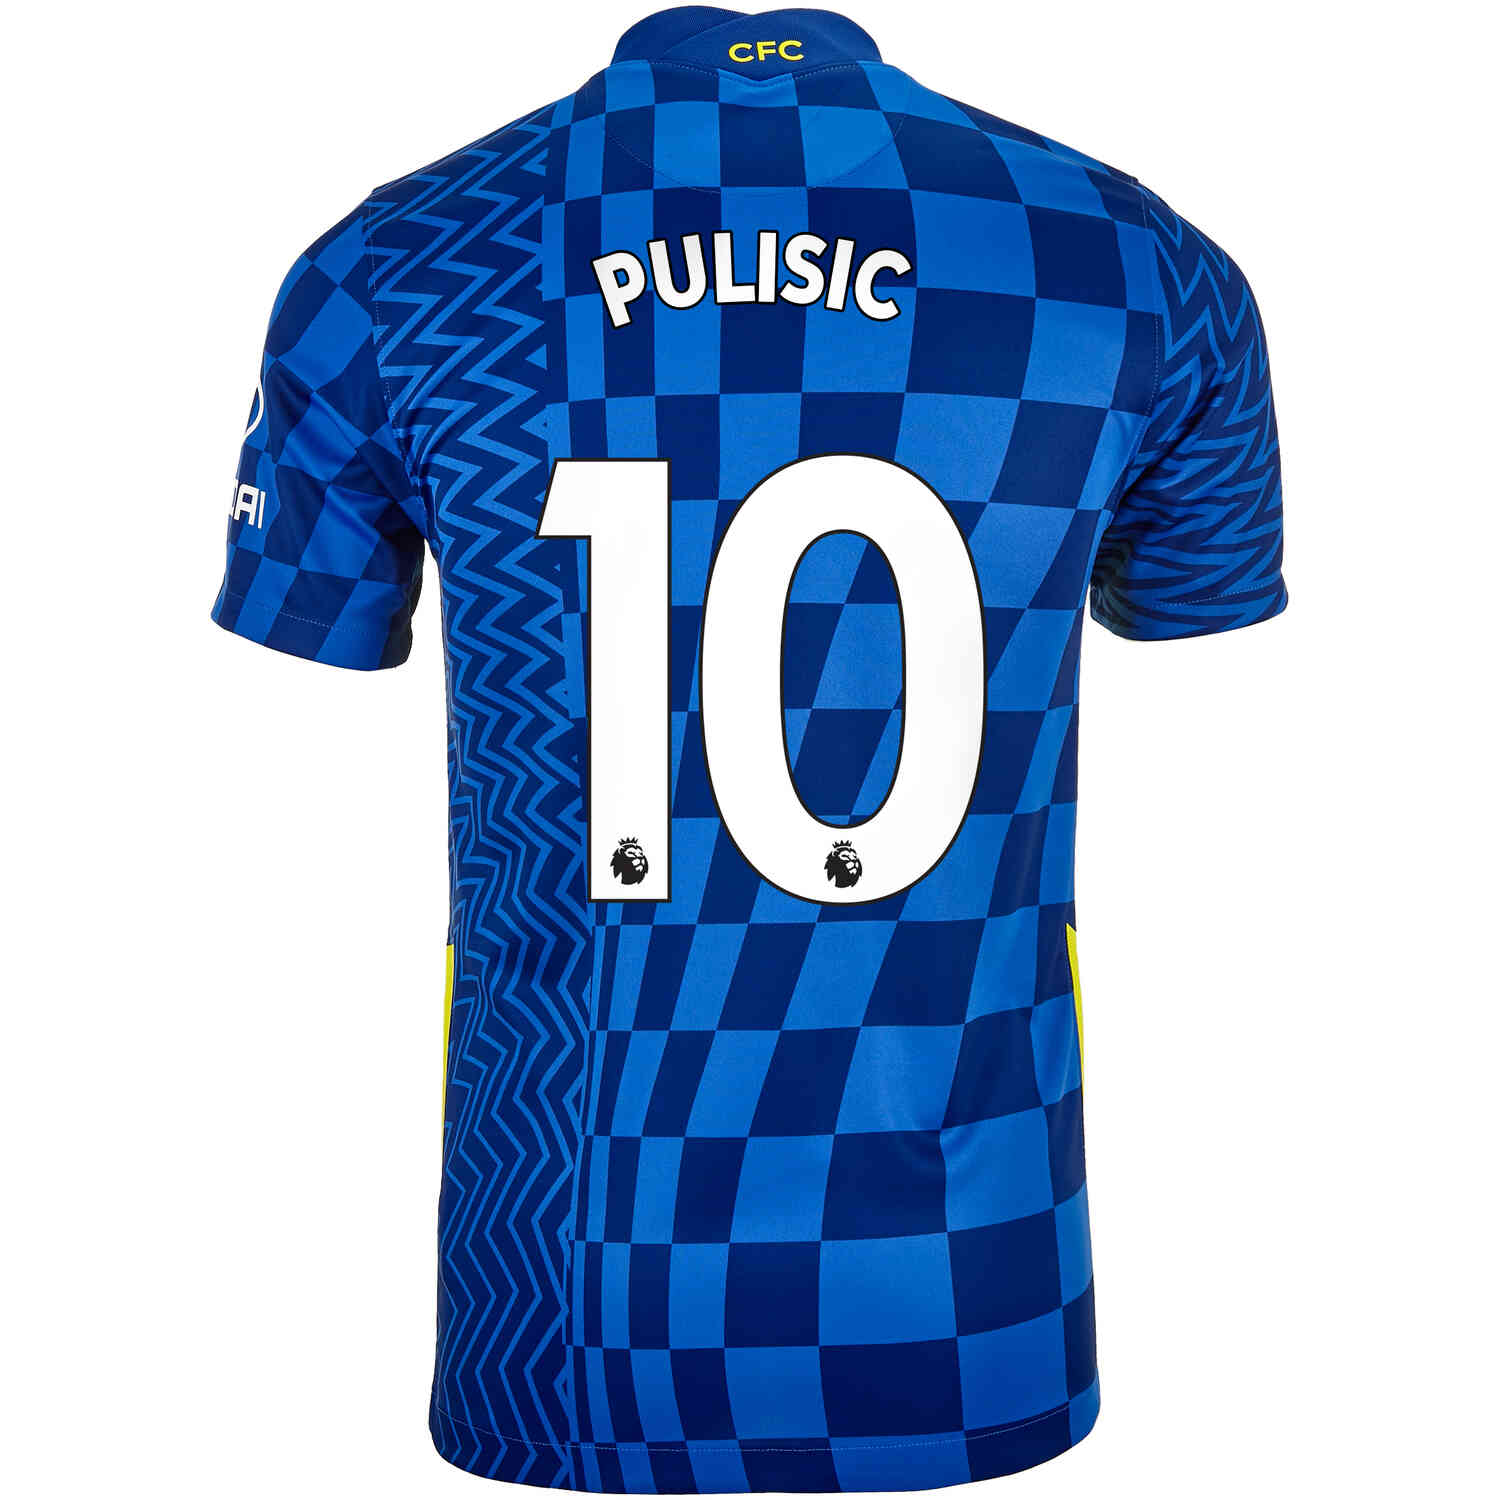 2021/22 Nike Christian Pulisic Chelsea Home Jersey - SoccerPro